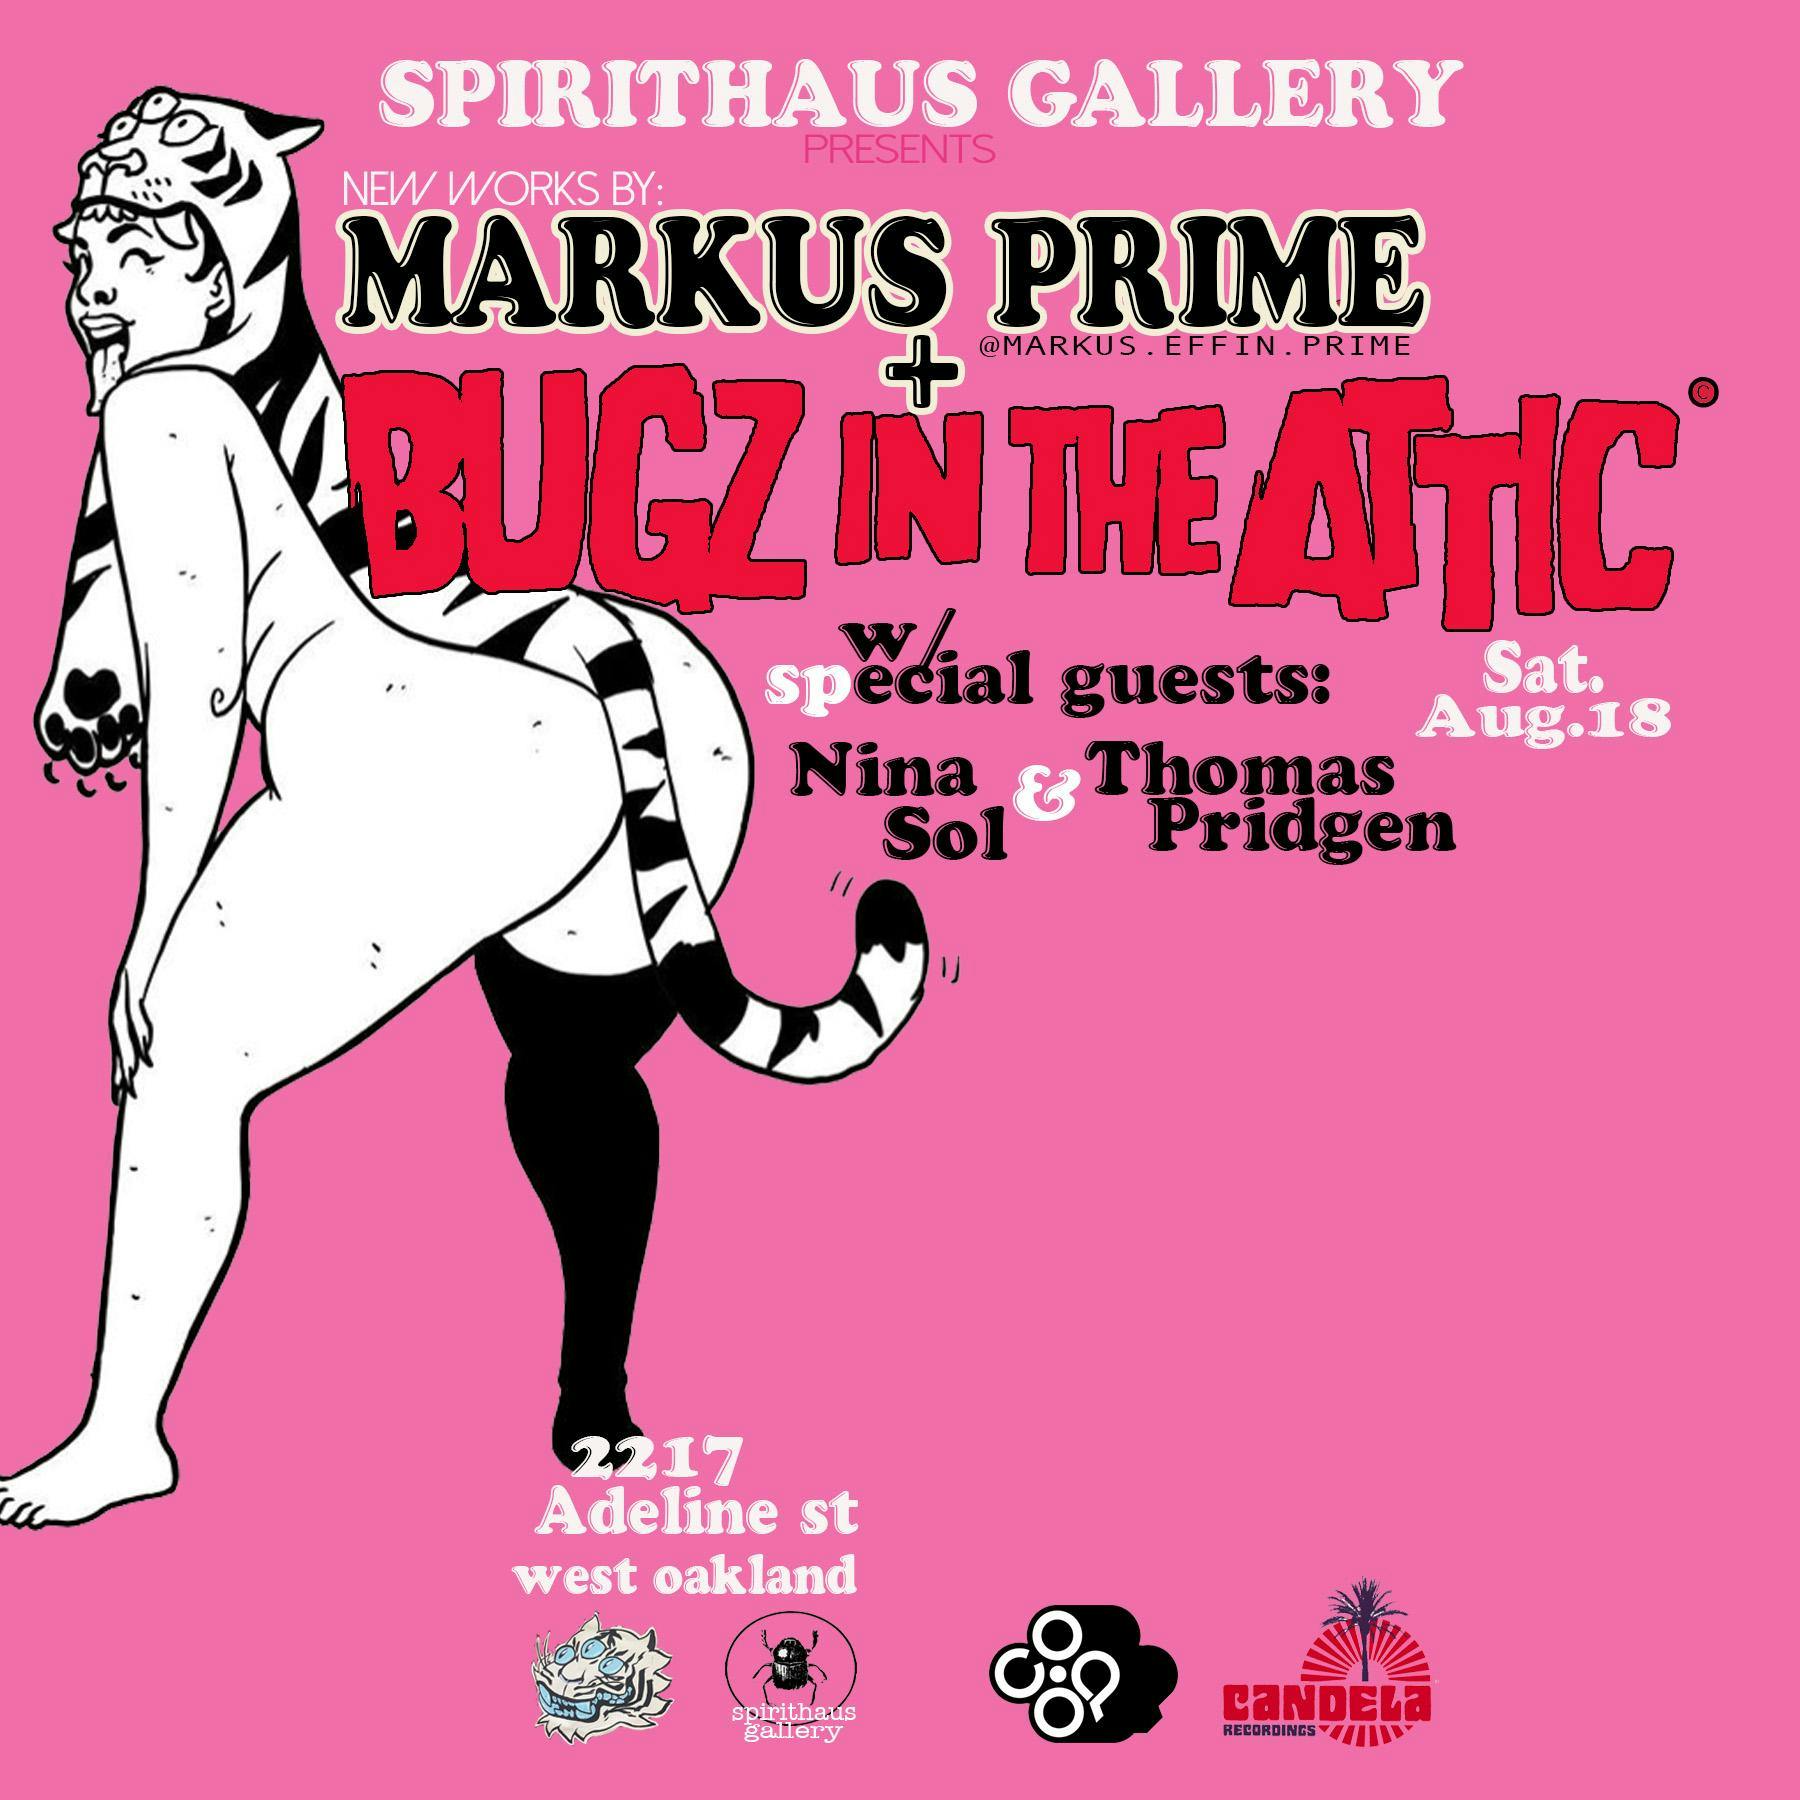 Markus Prime Art Reception w/ Bugz in the Attic ,Nina Sol, & Thomas Pridgen